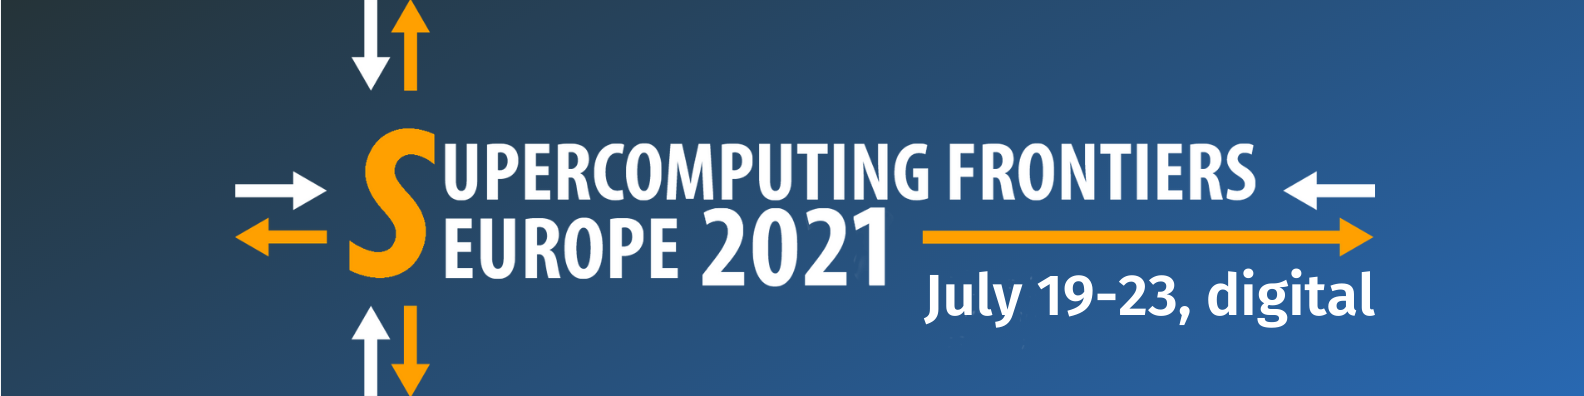 Supercomputing Frontiers Europe 21, July 19-23 digital